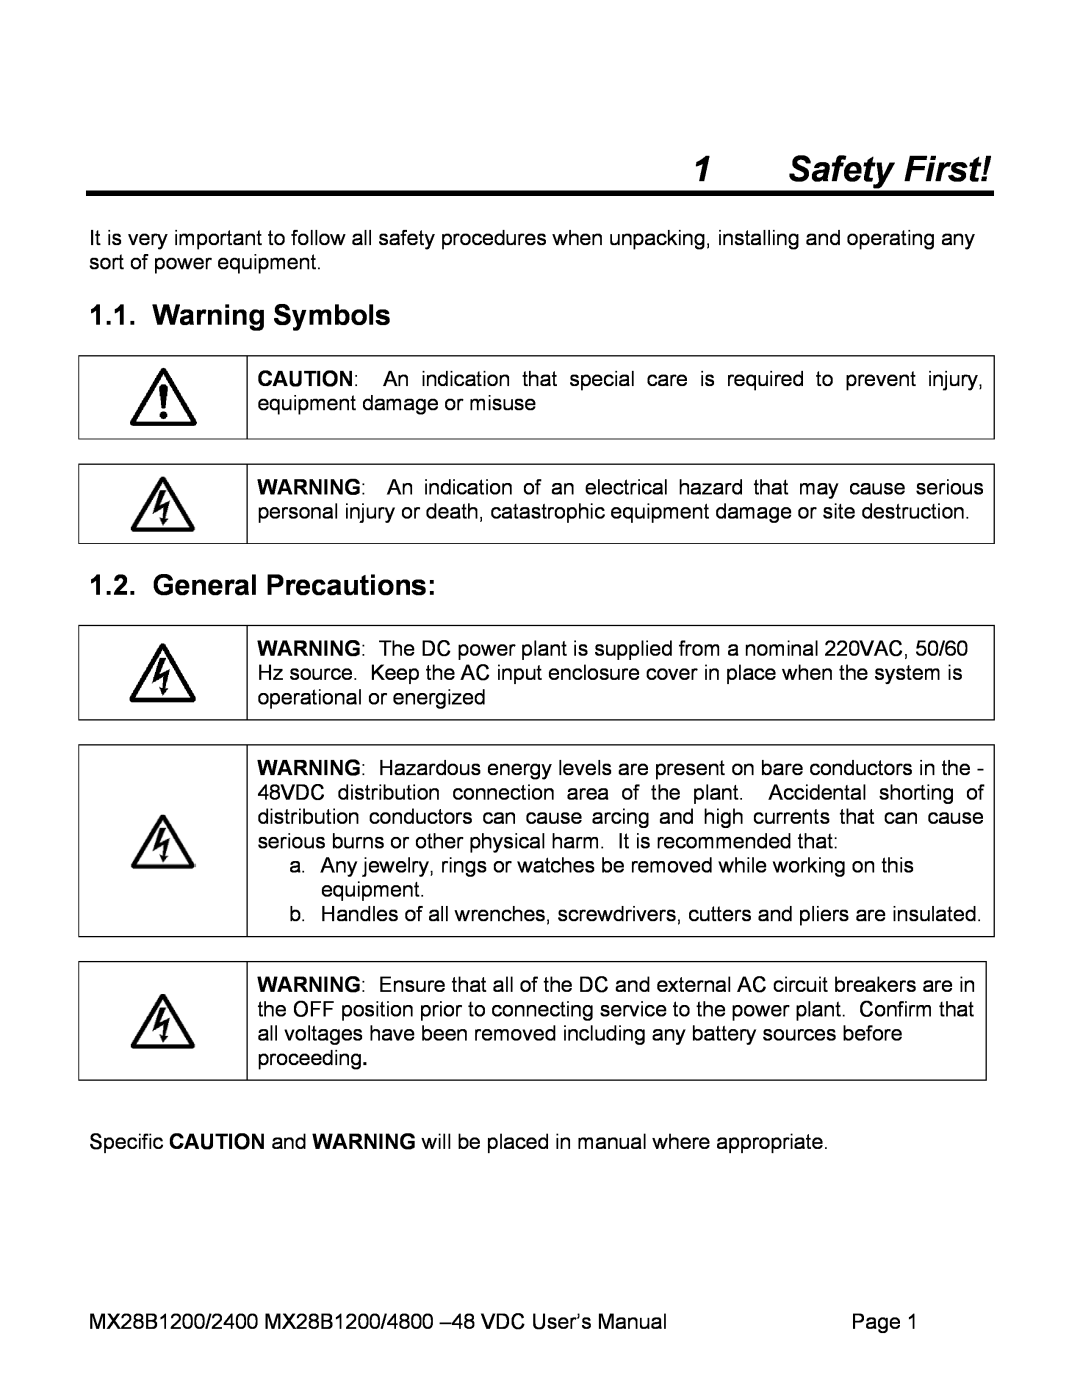 American Power Conversion MX28B4800, MX28B2400 manual Safety First, Warning Symbols, General Precautions 